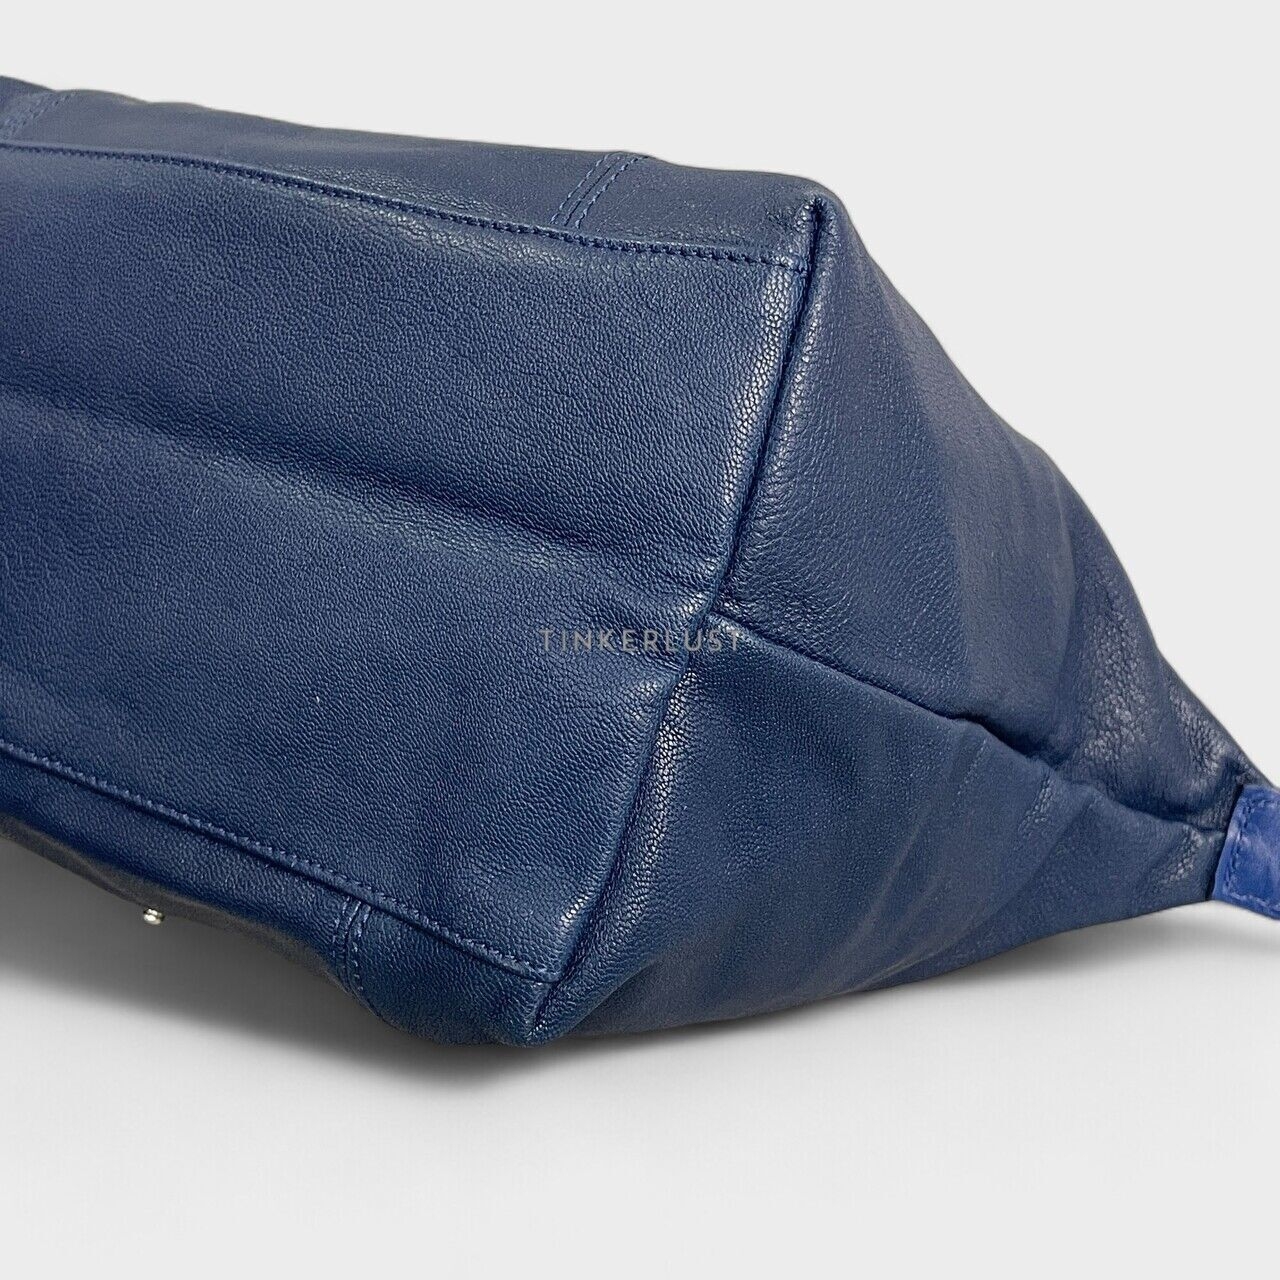 Longchamp Le Pliage Cuir Indigo SHW Tote Bag